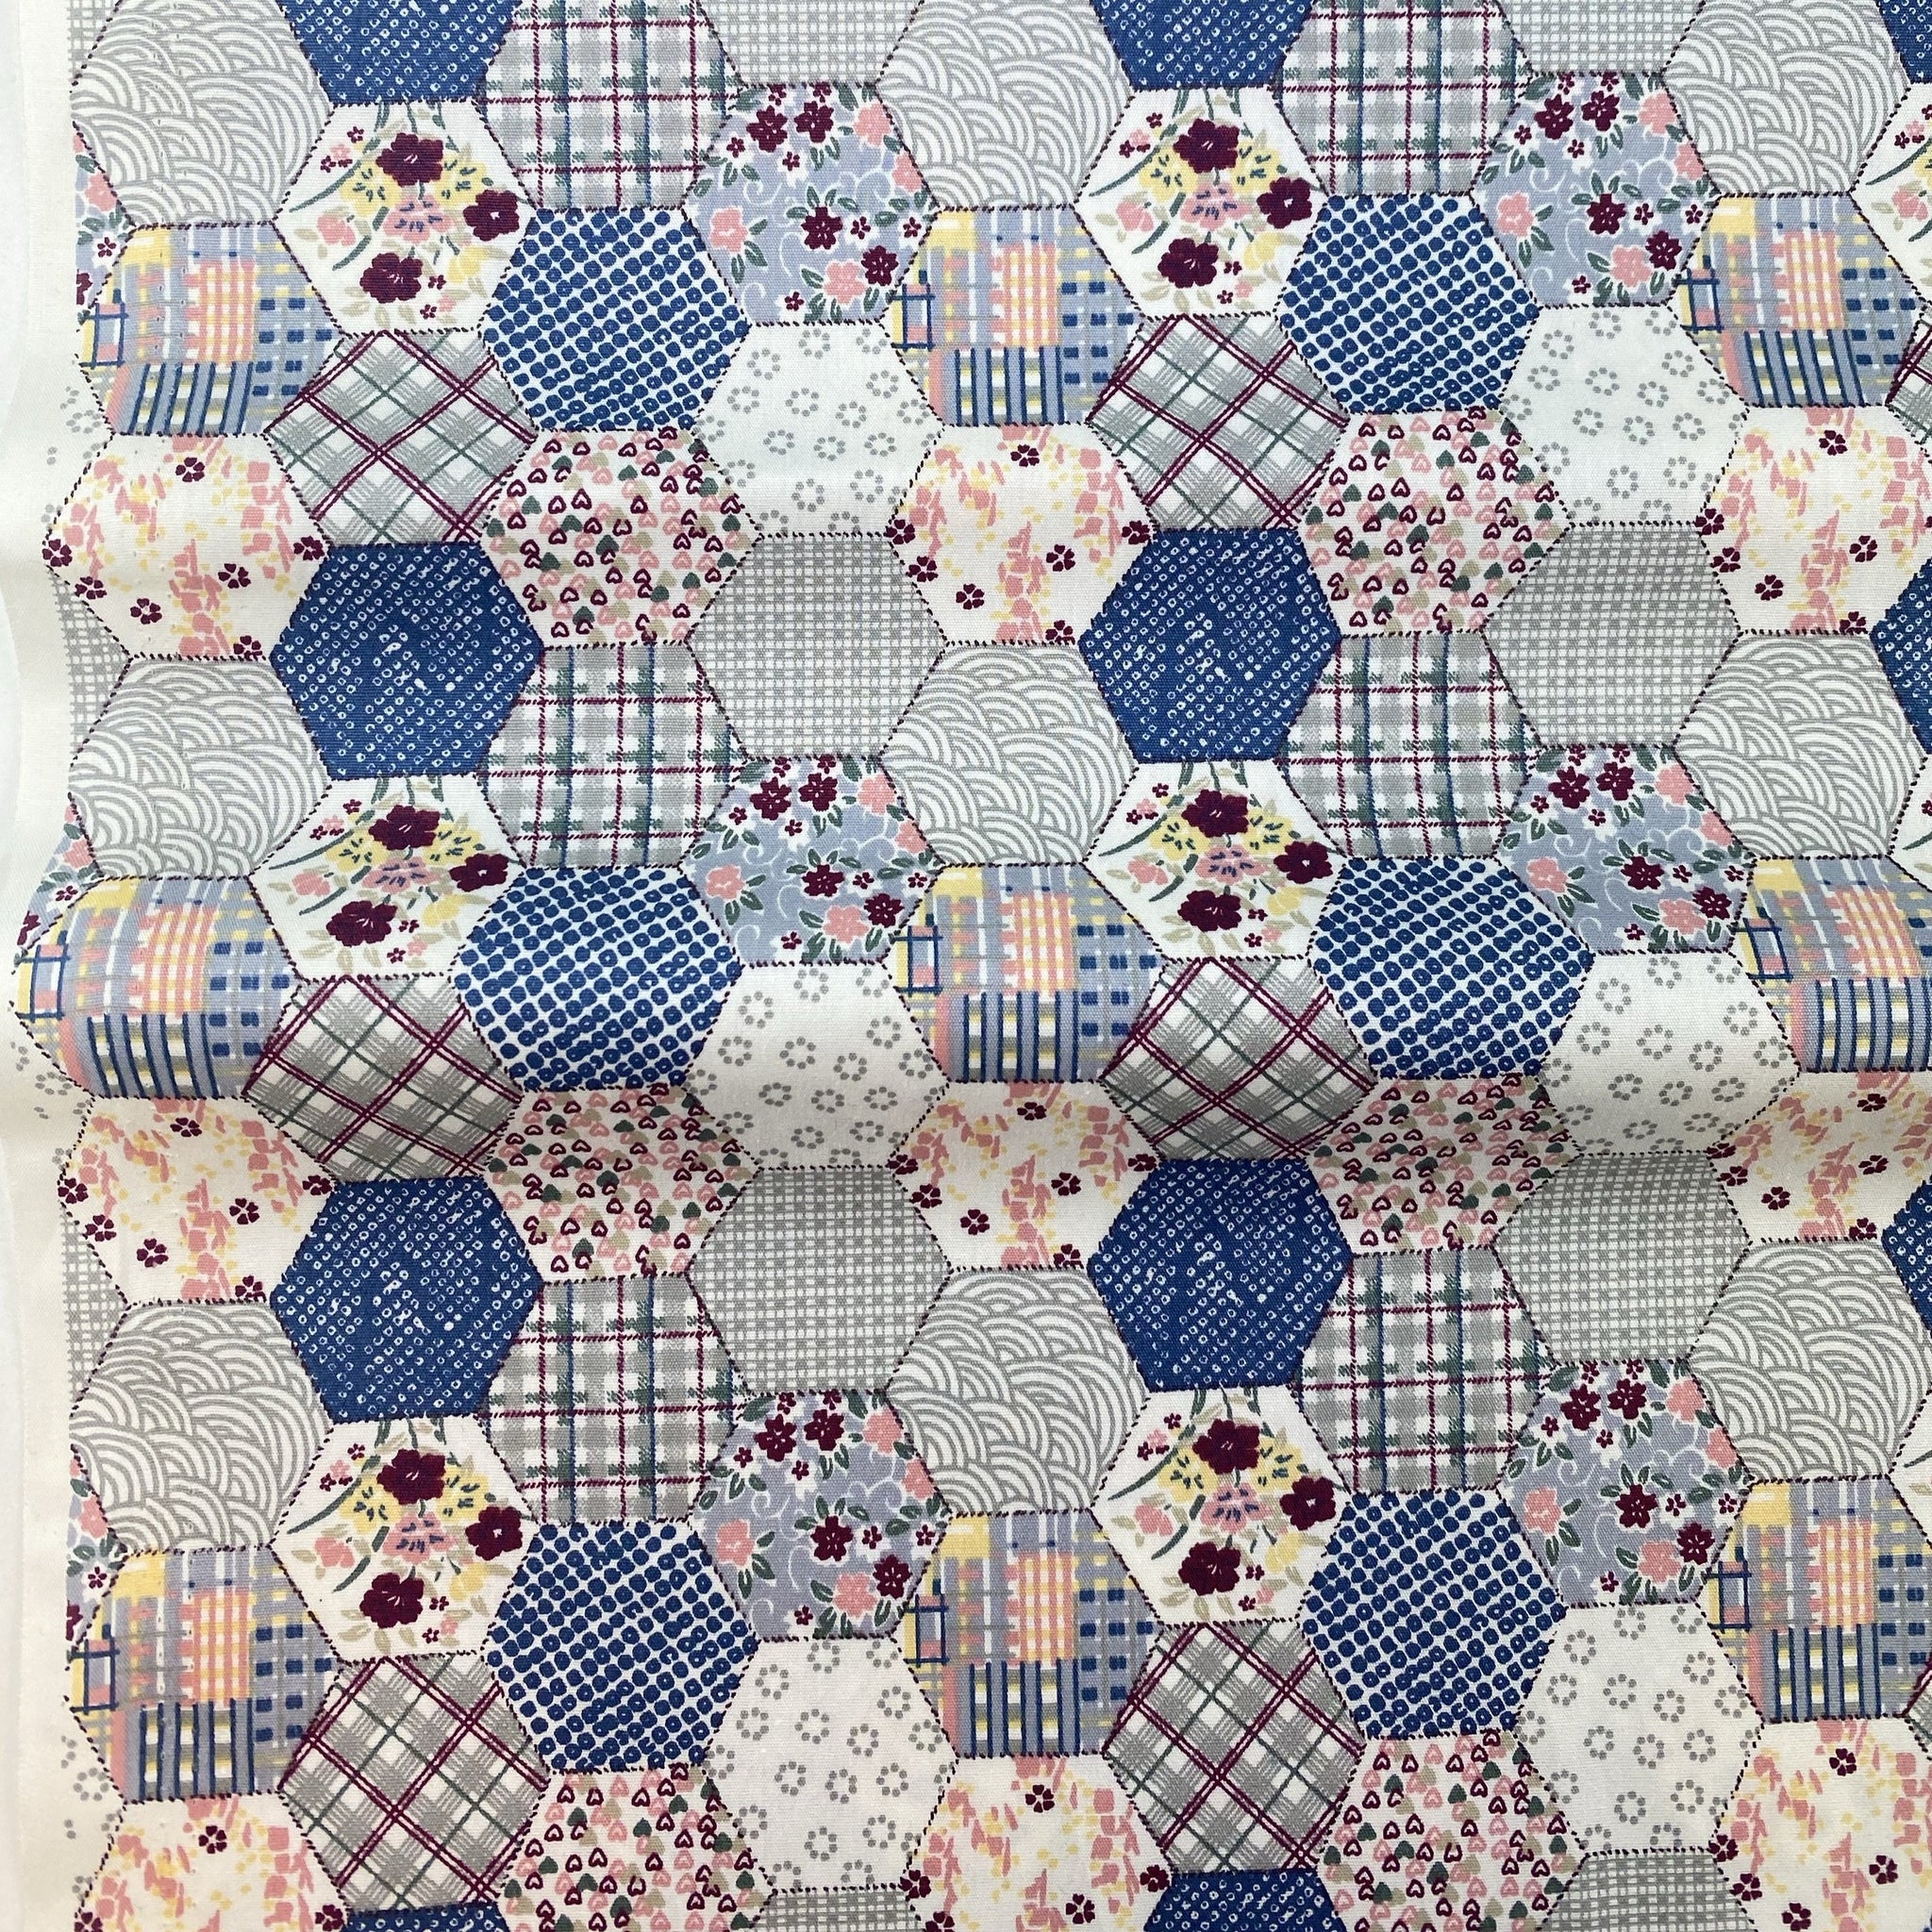 Cotton Poplin Printed Hexagon Patch Work Design Floral Hearts Blue